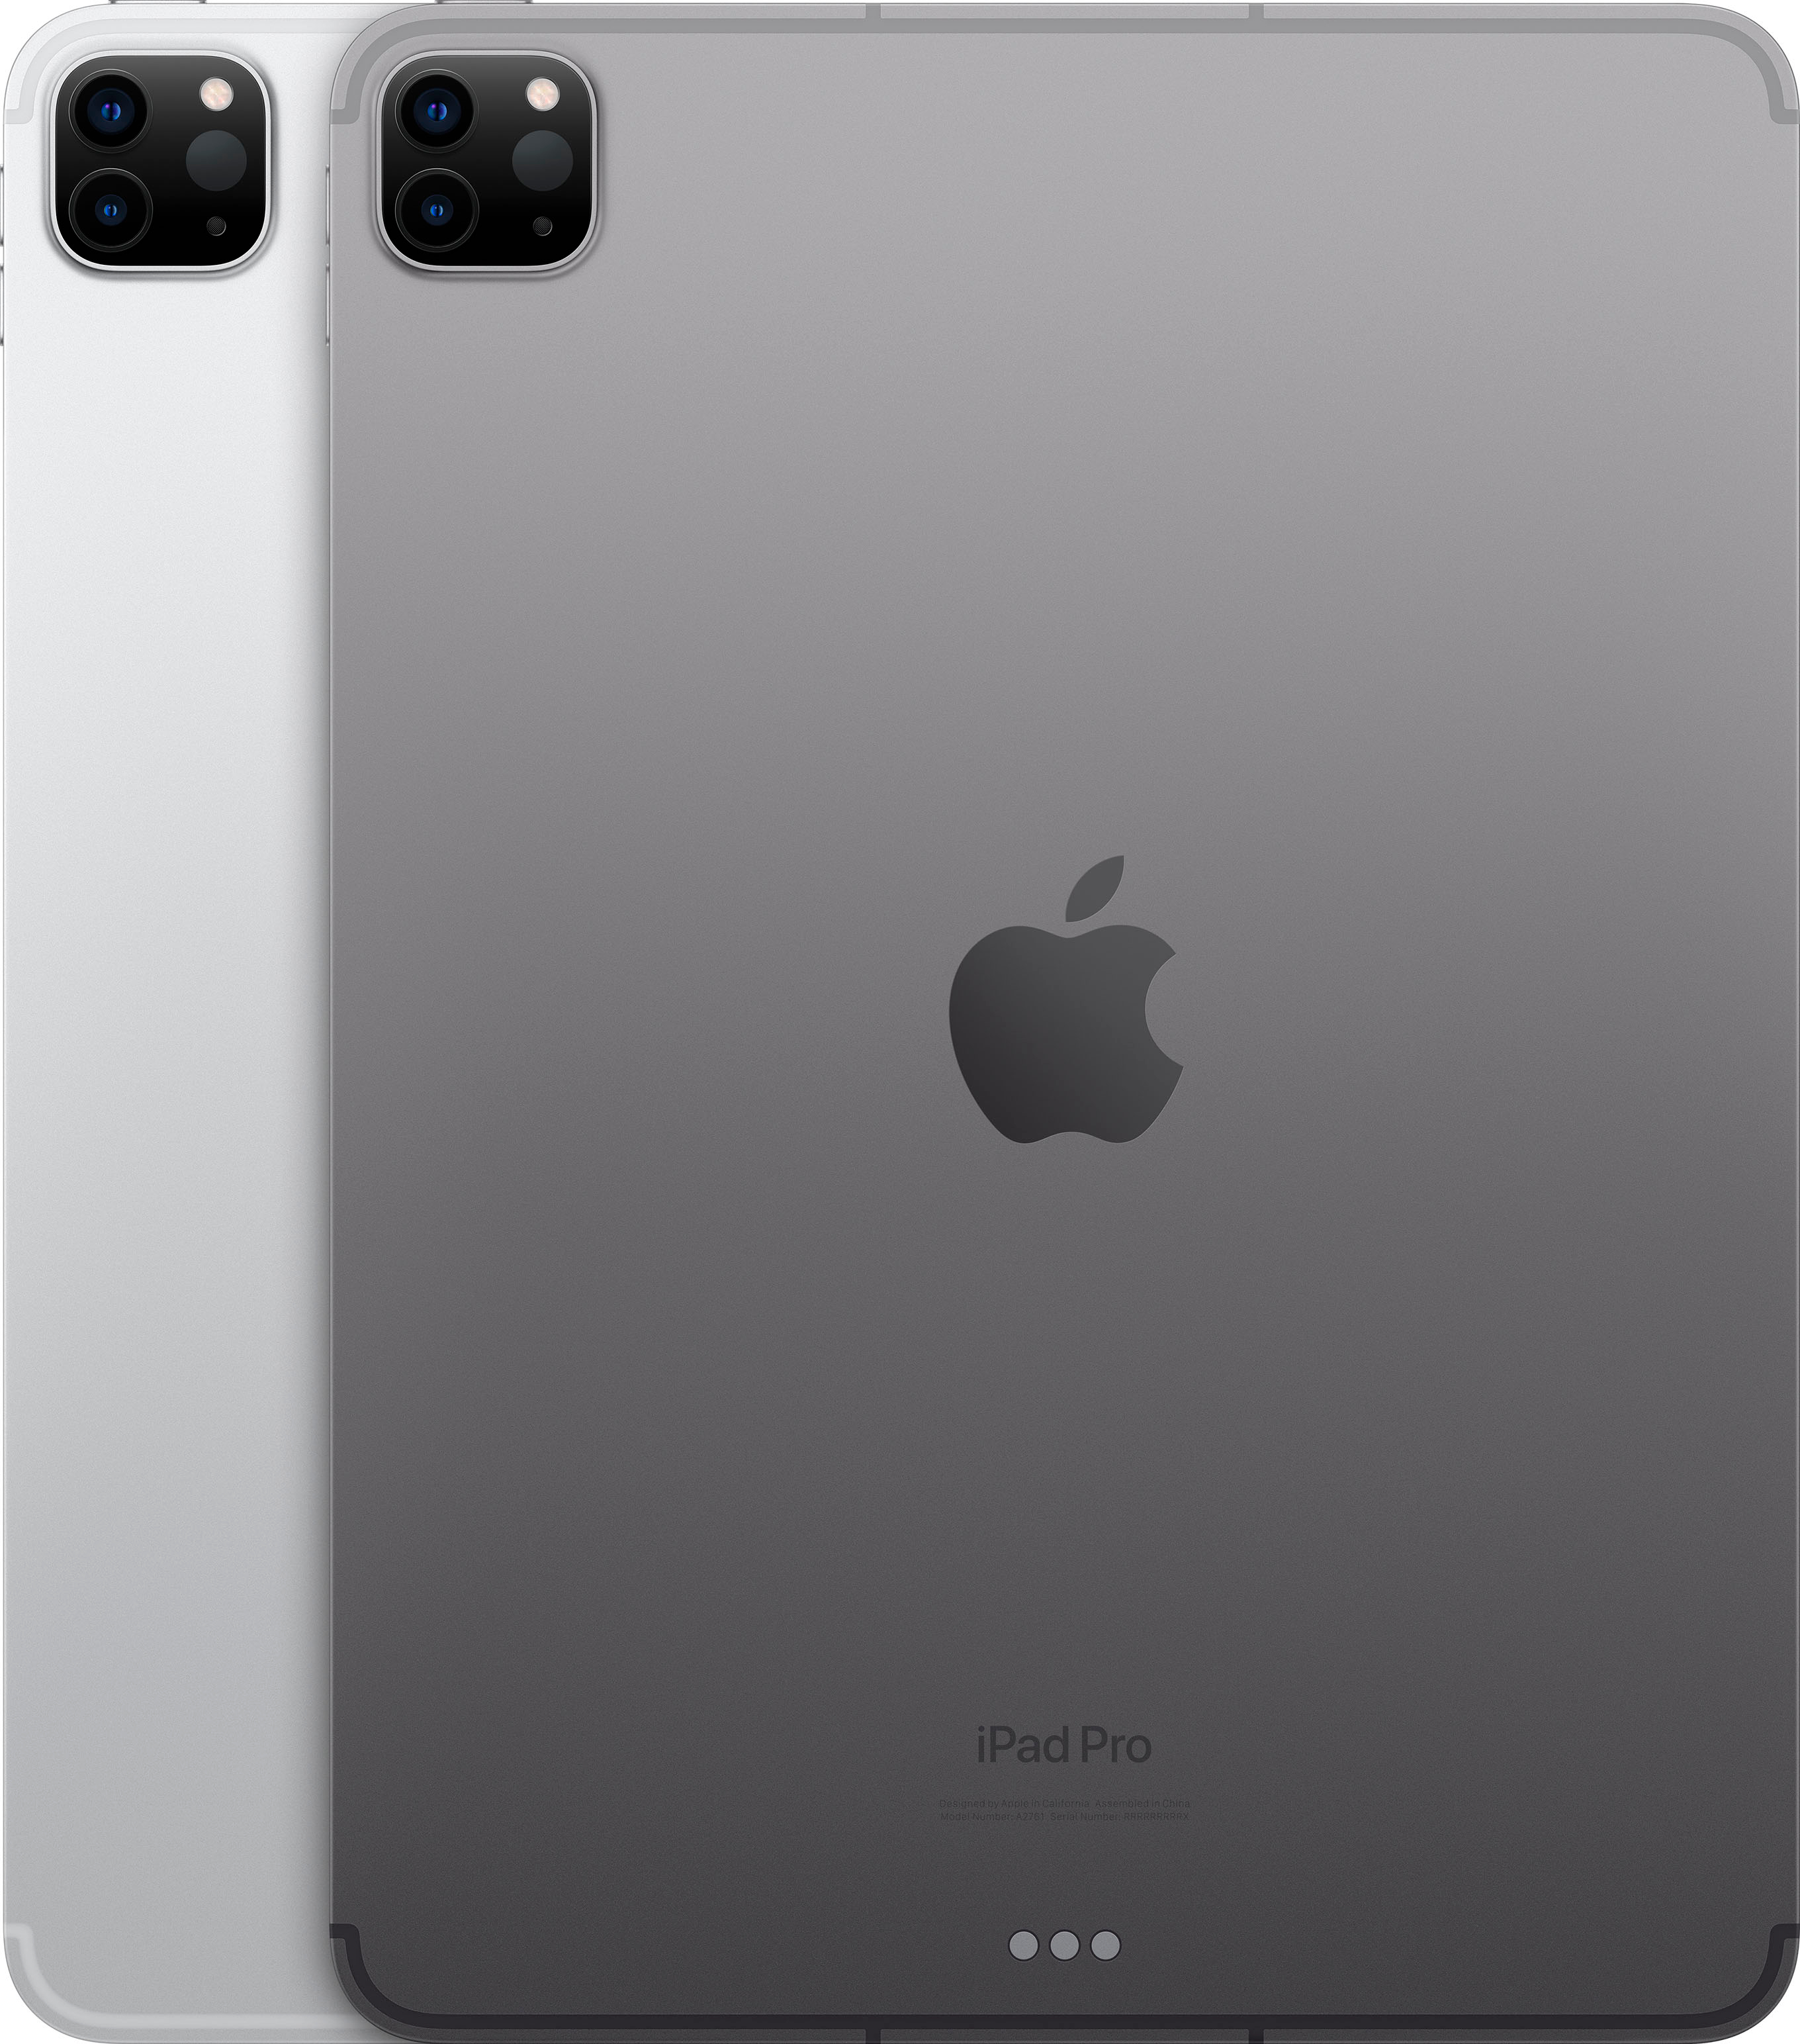 Apple iPad Pro 11-inch specs - PhoneArena